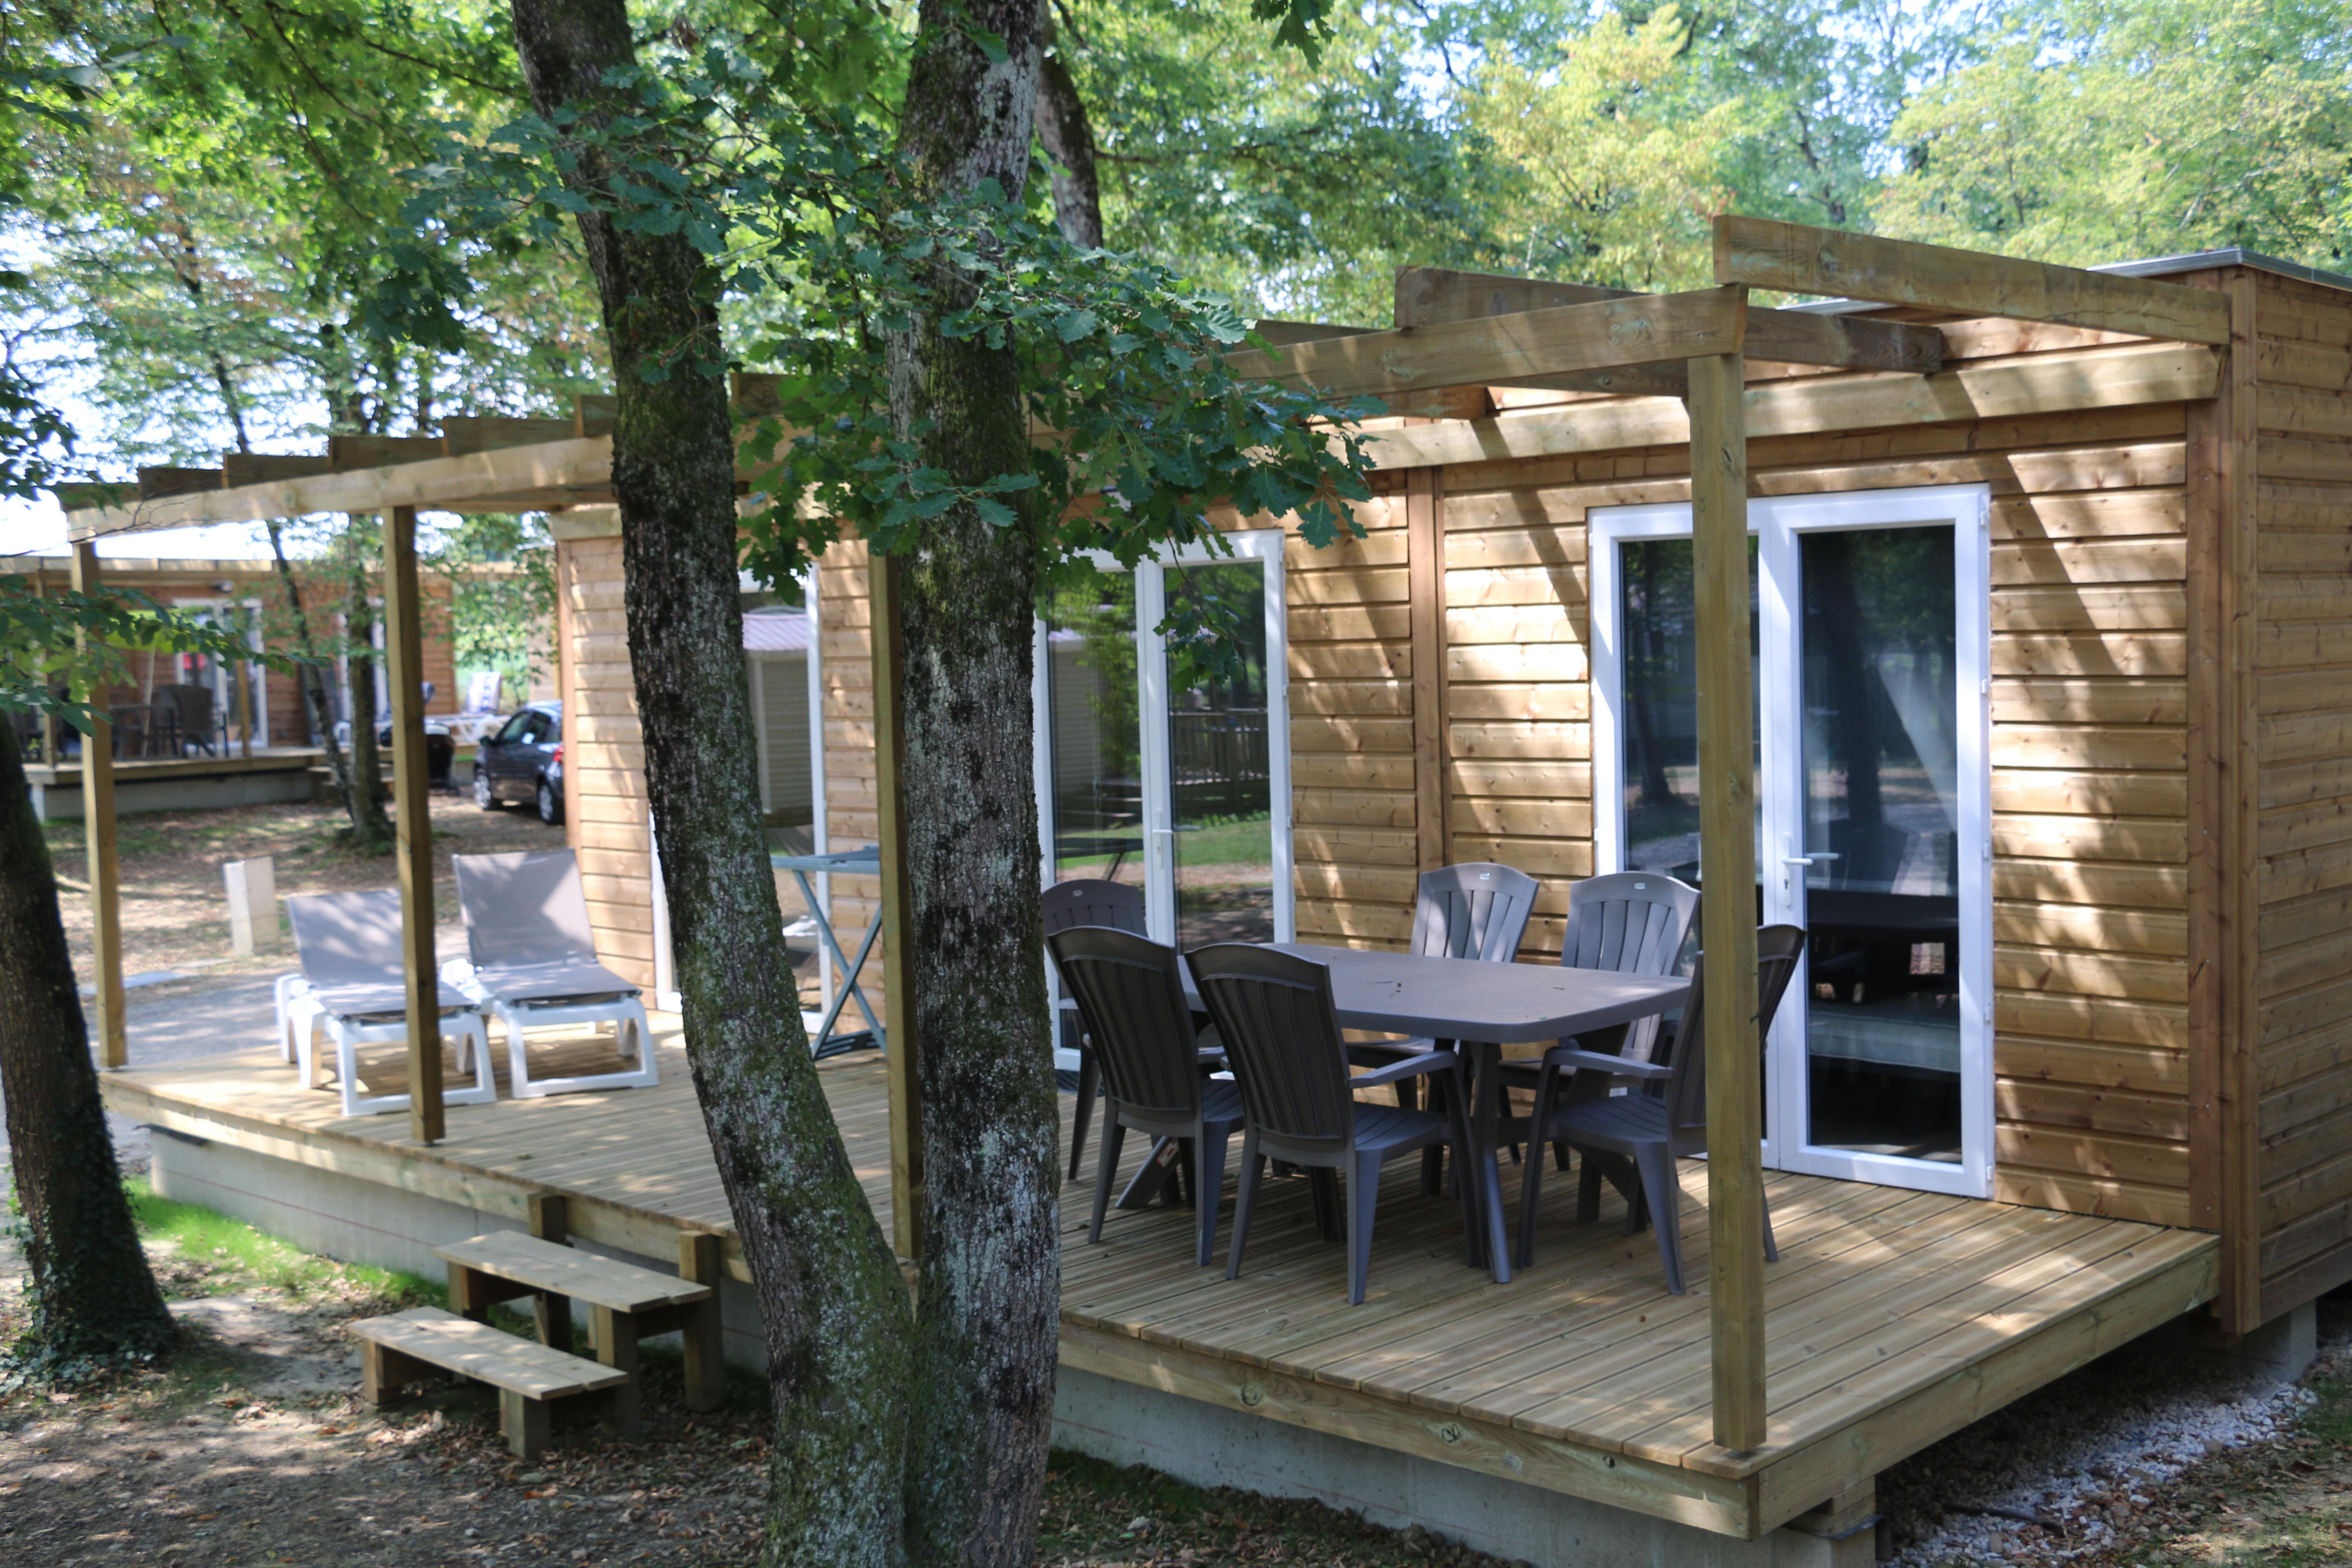 Huuraccommodatie - Chalet Premium 35M² (2 Slaapkamers - 2 Badkamers) Tv - Vaatwasser - Flower Camping Lac du Marandan